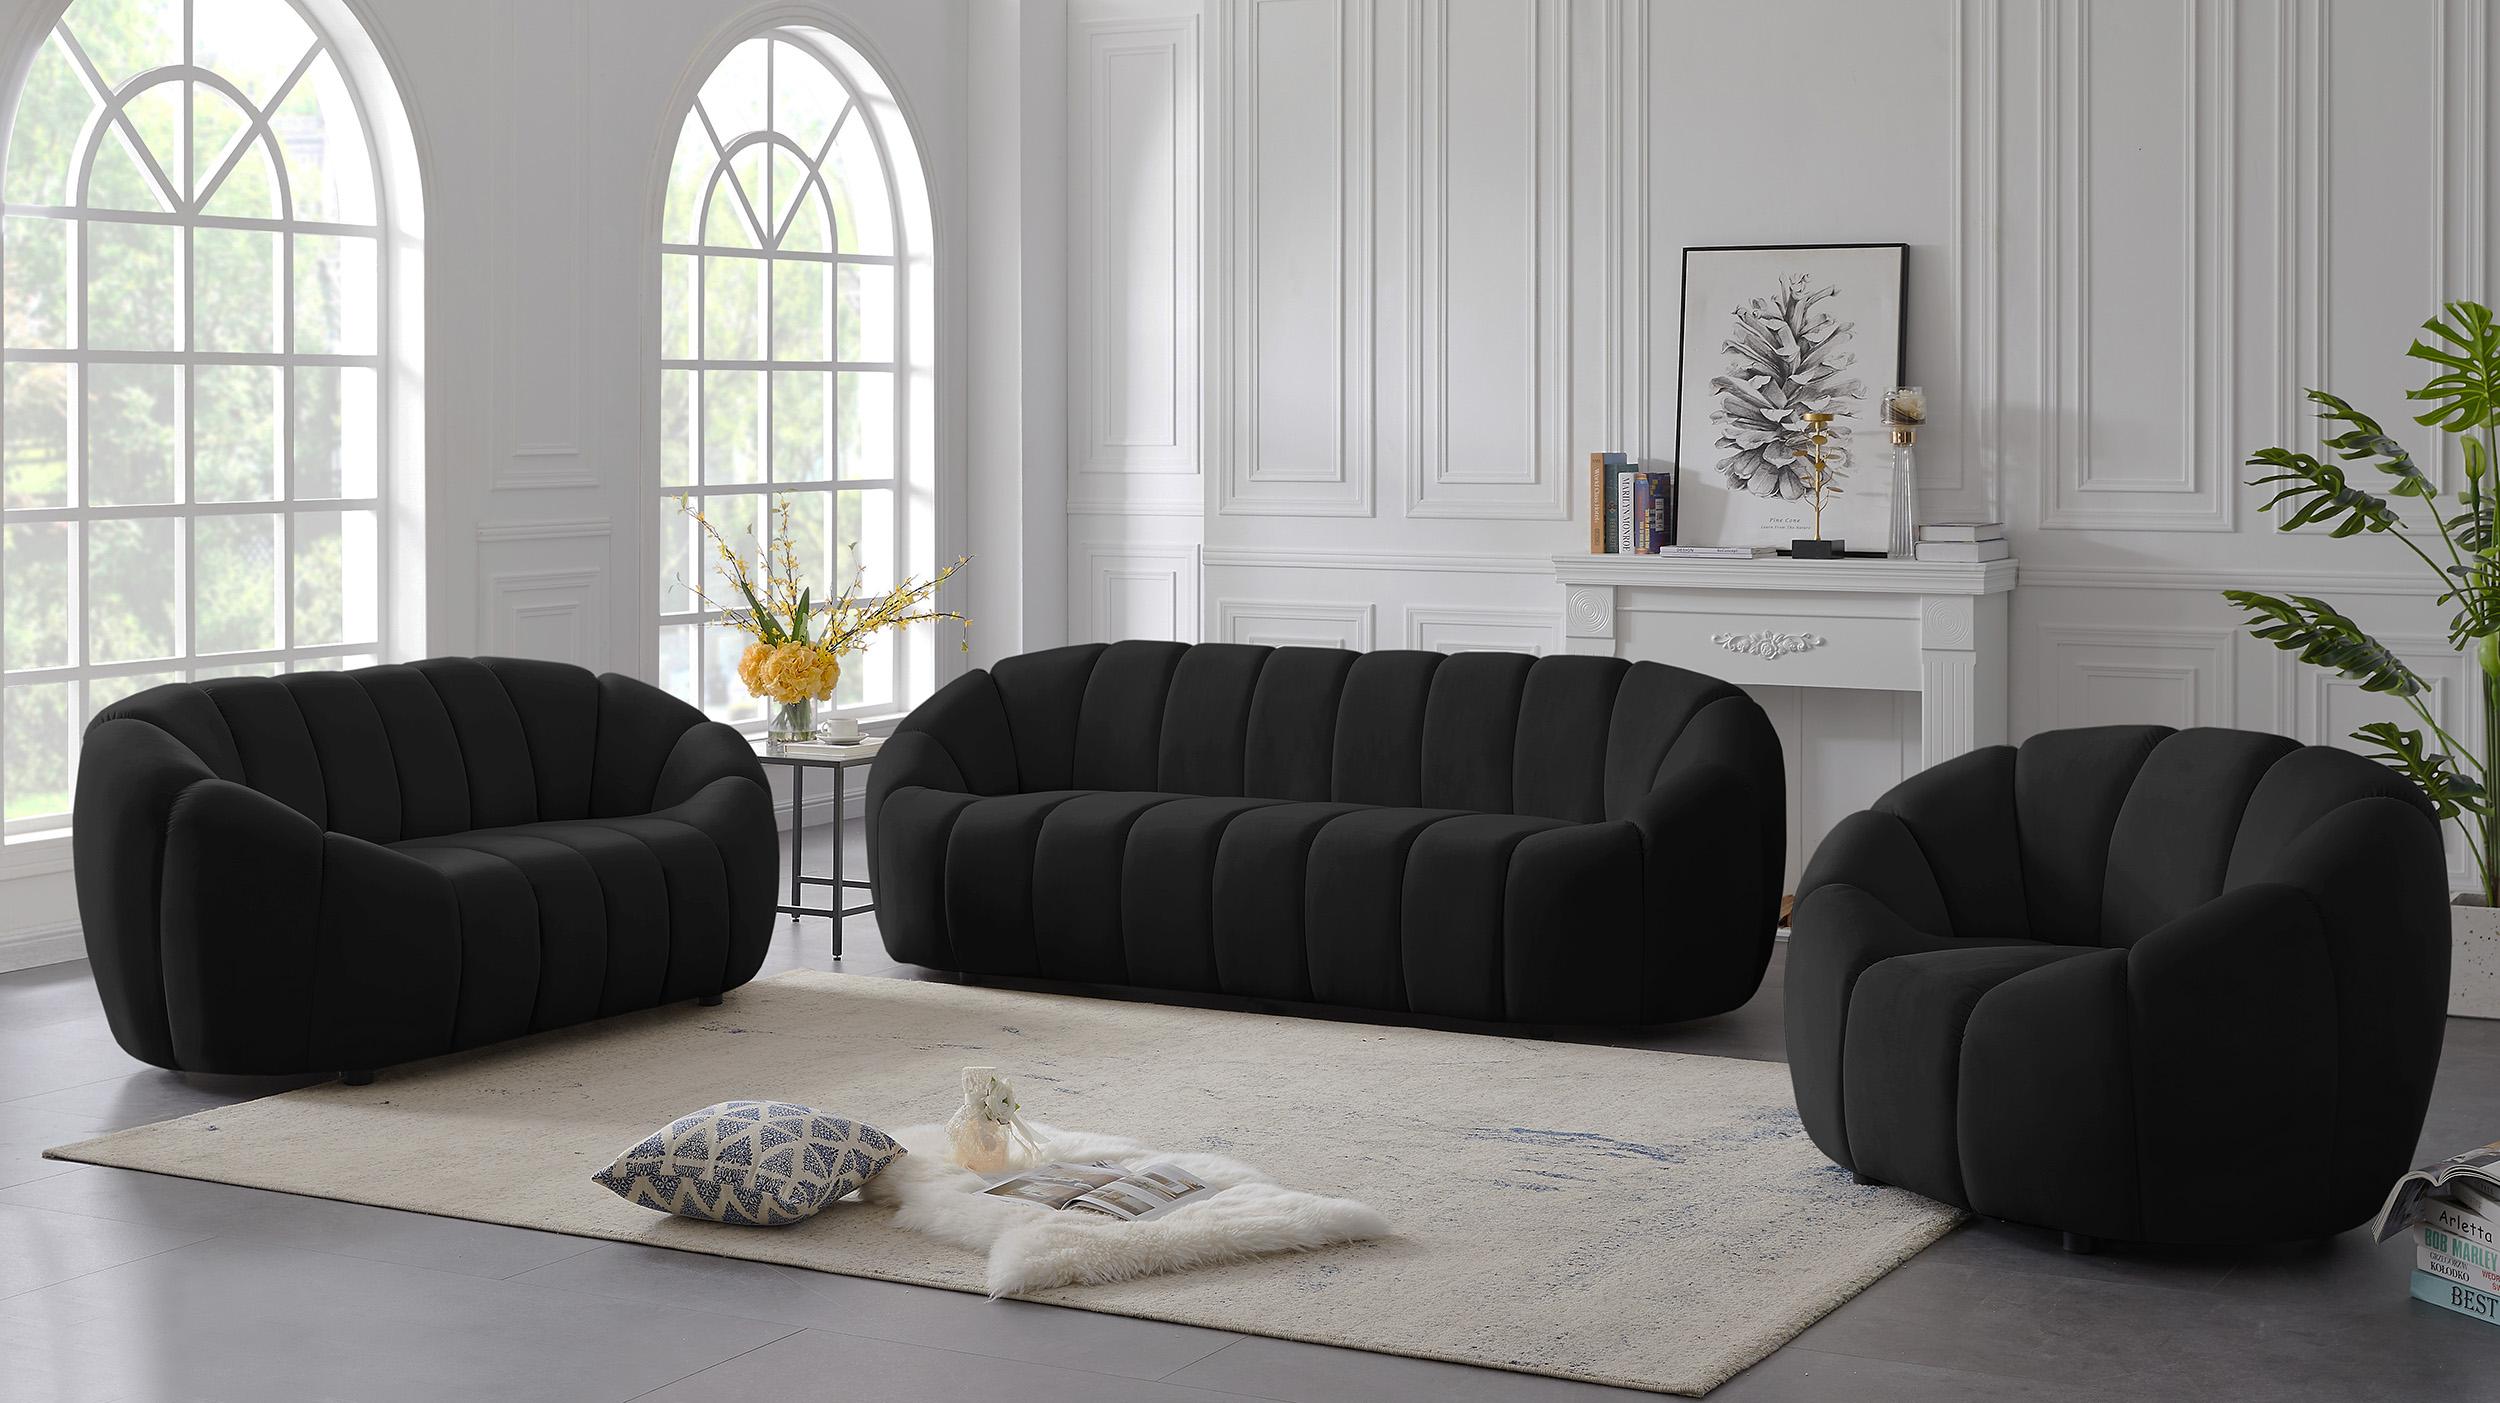 

    
613Black-C Meridian Furniture Arm Chairs
